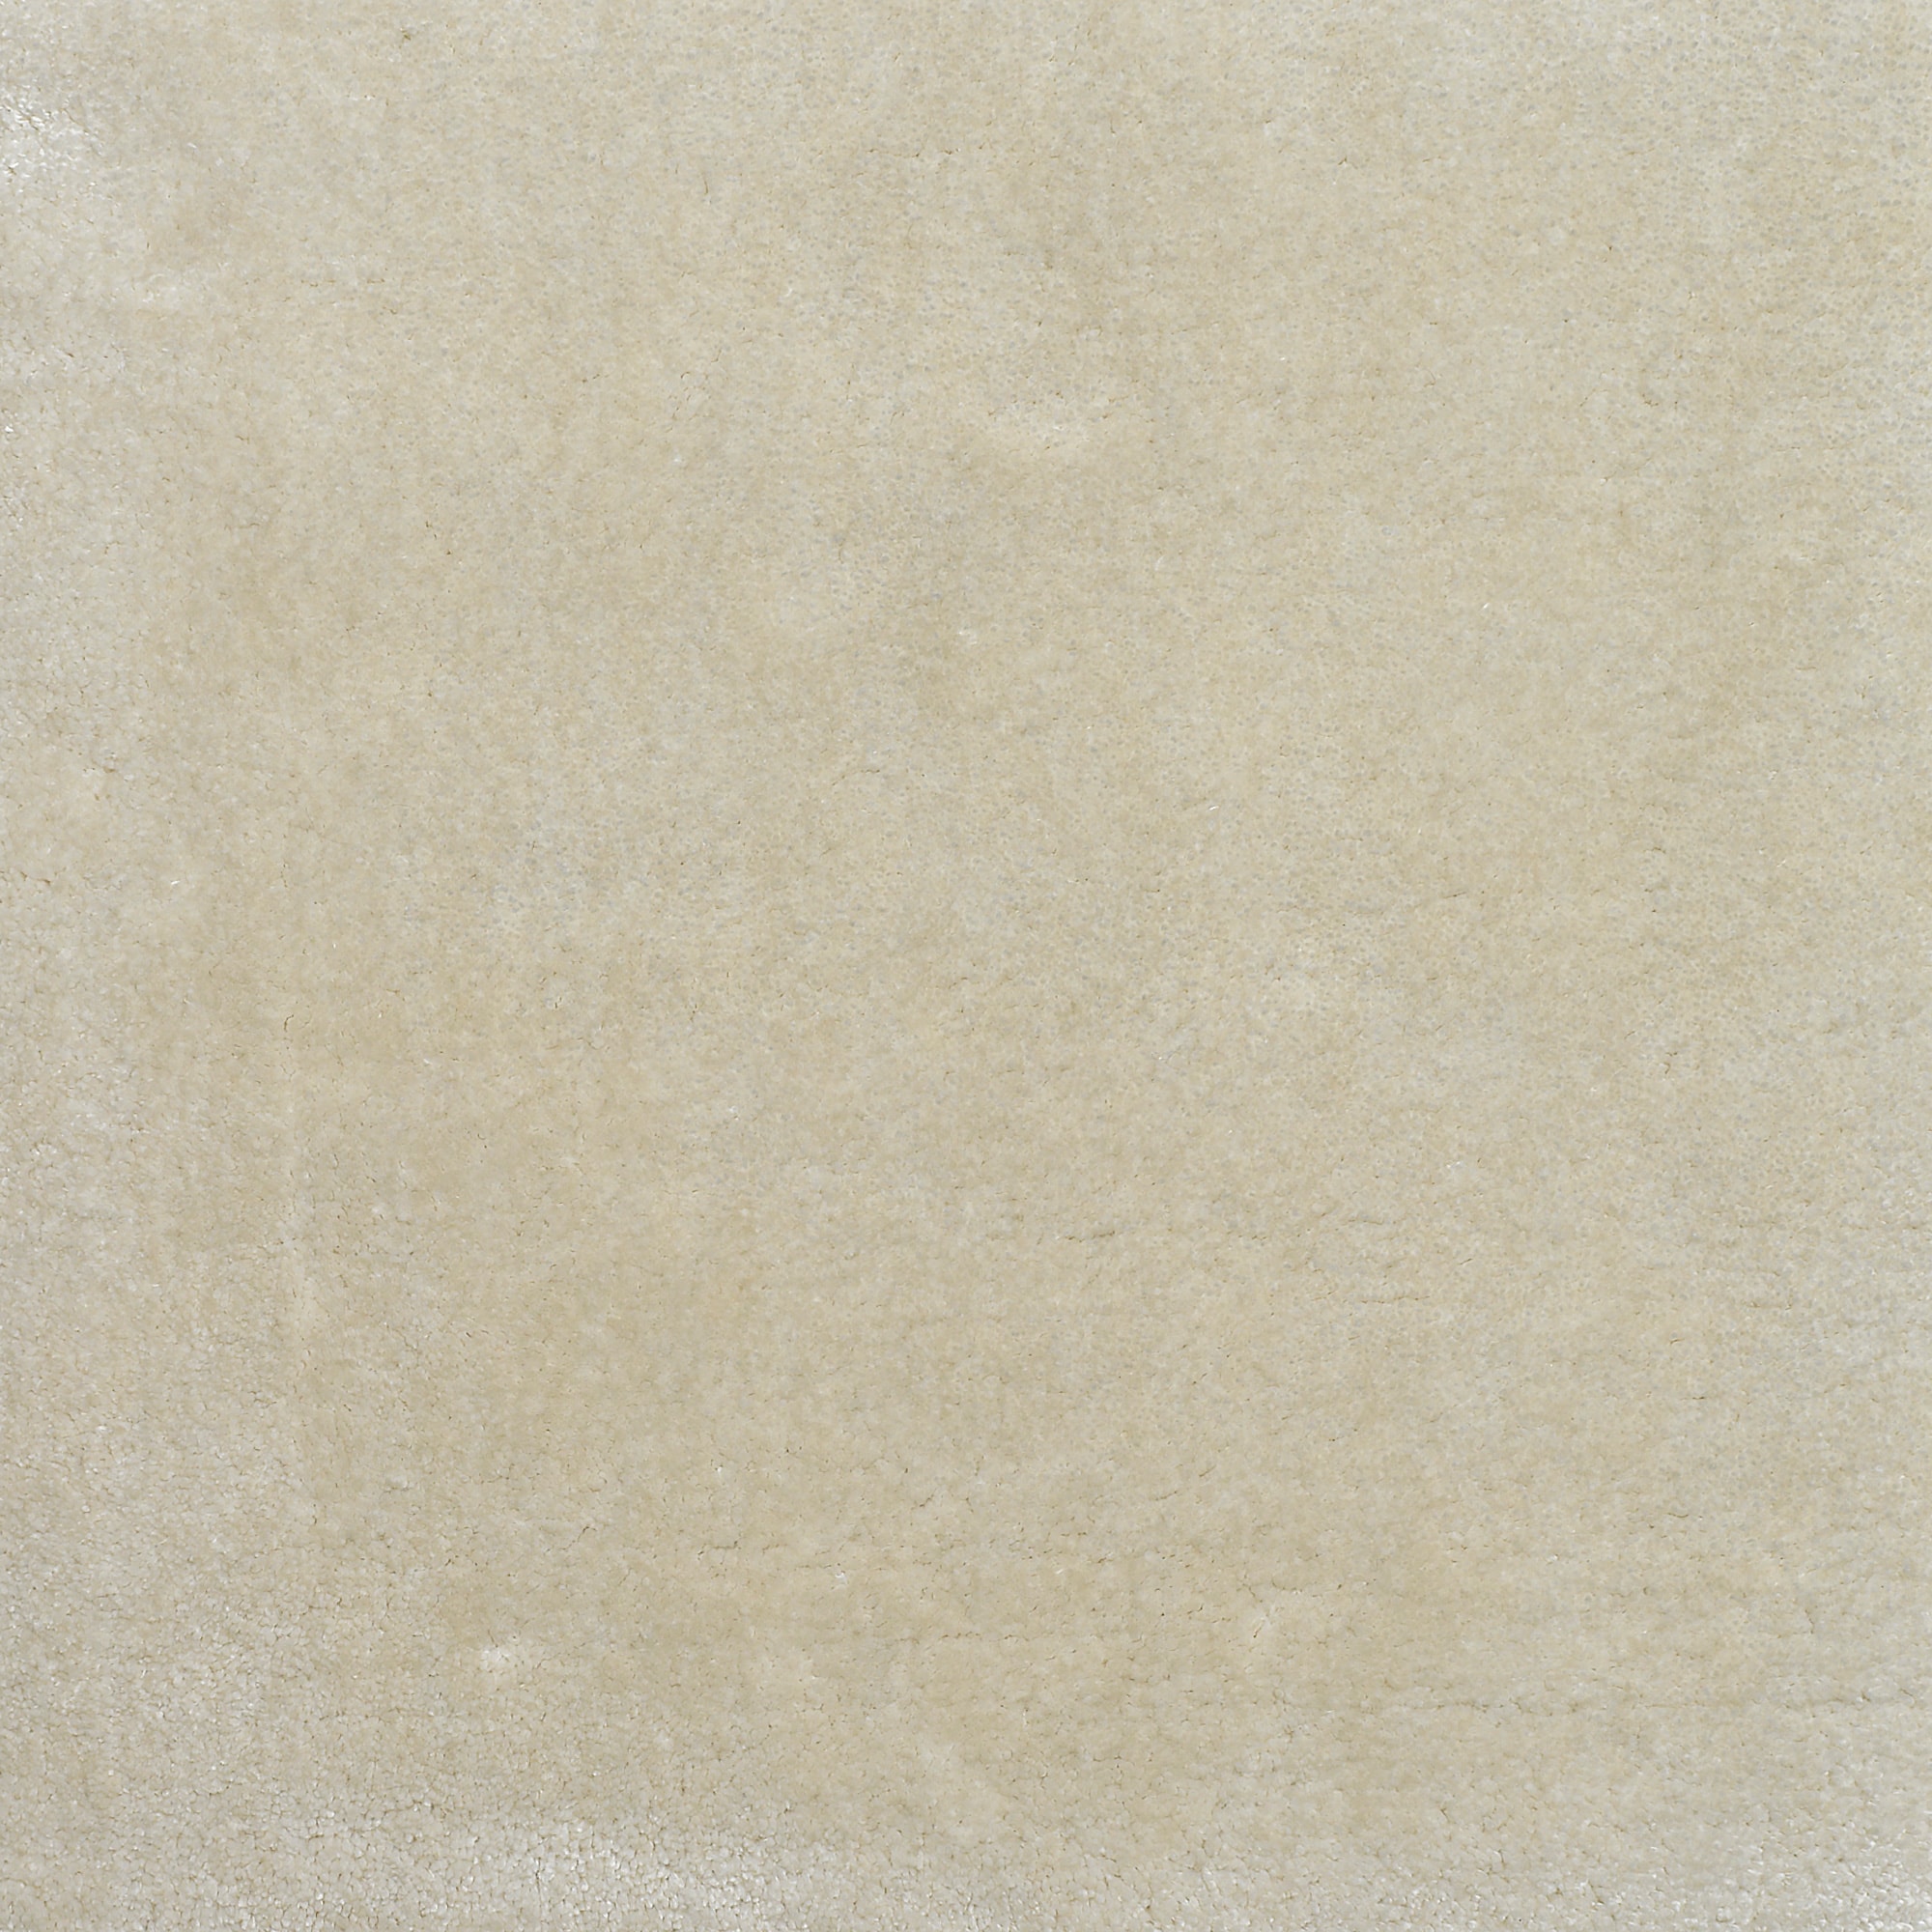 Luxure: Winter White - 100% Bamboo Carpet